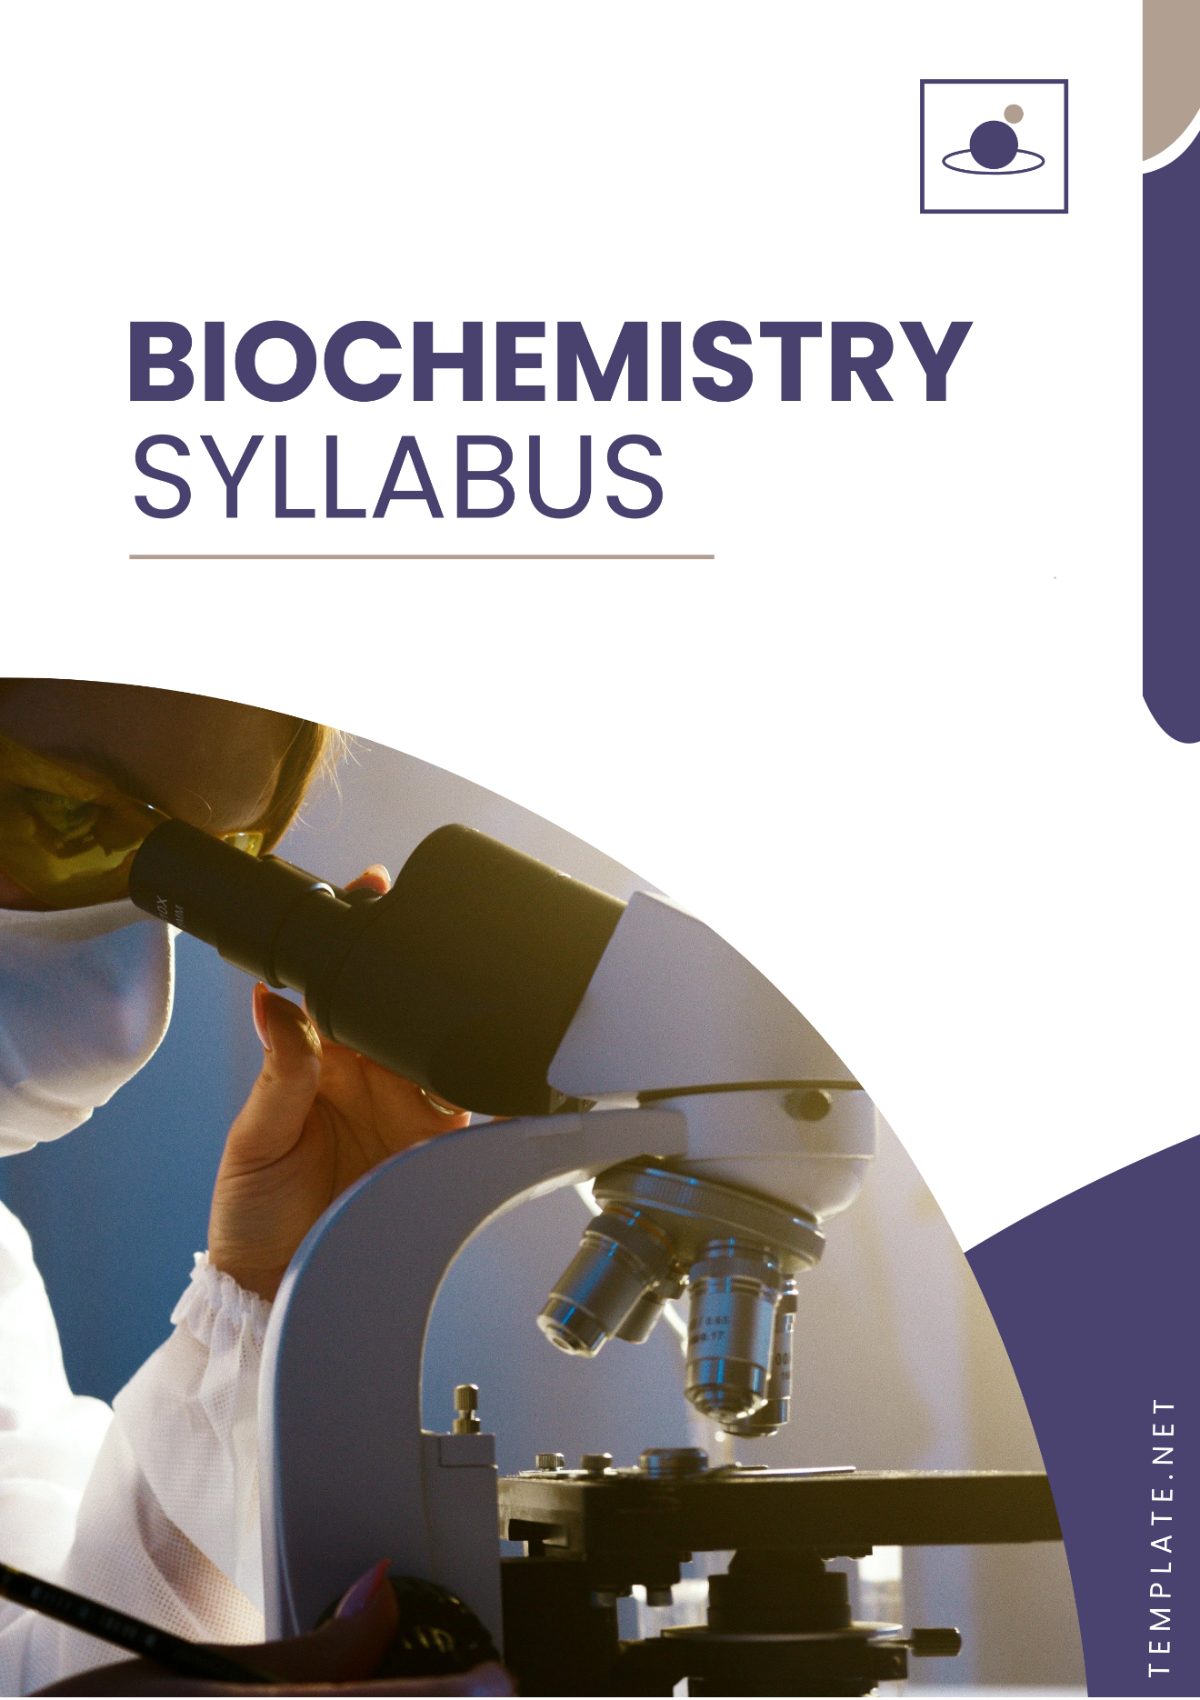 Biochemistry Syllabus Template